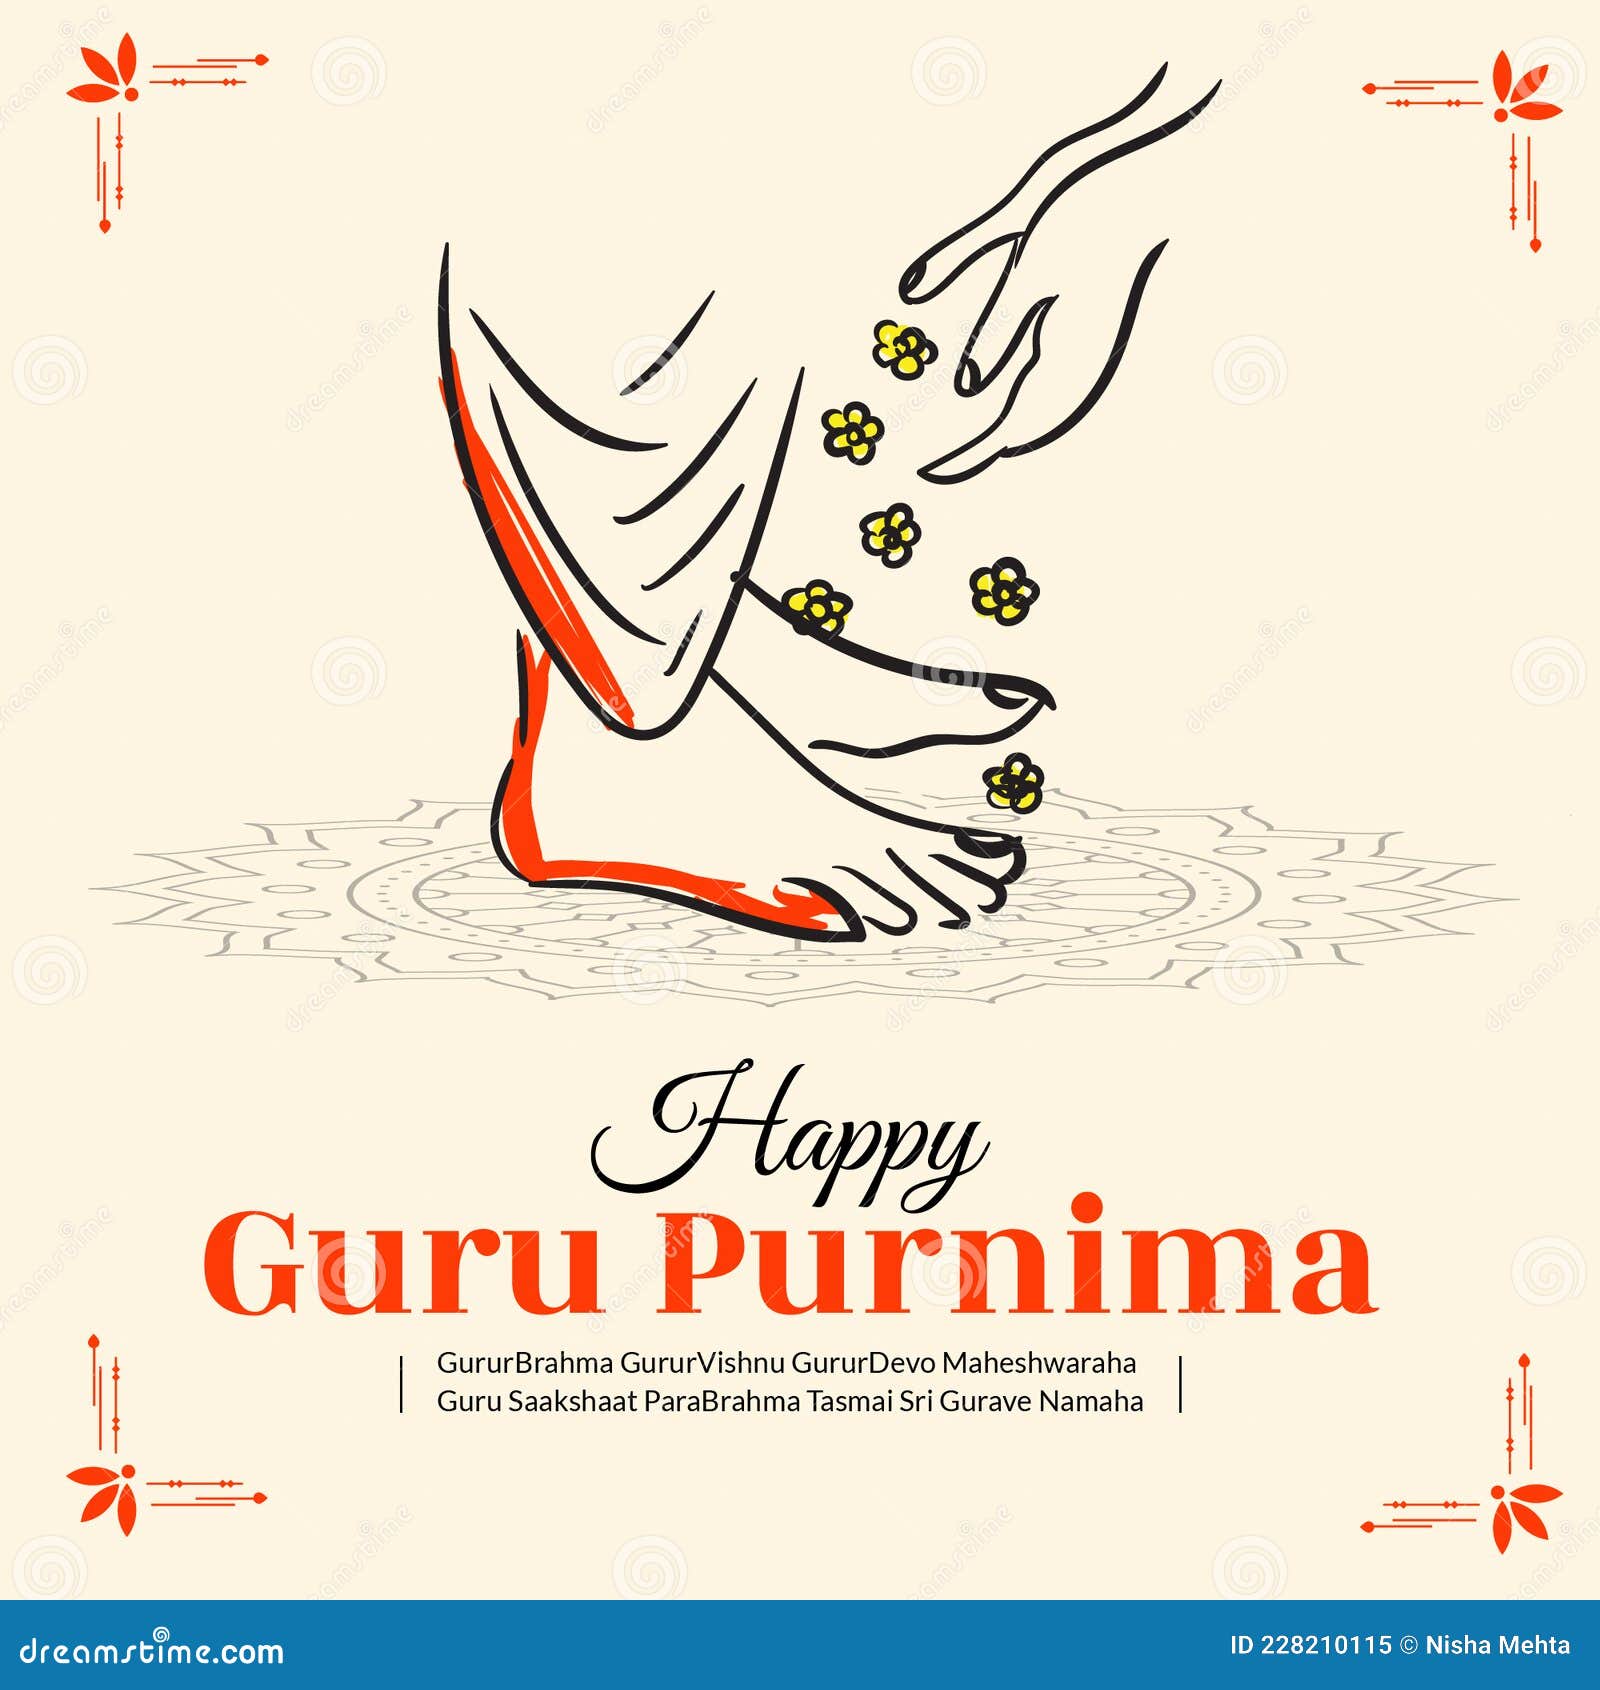 How to draw Guru Shishya  Guru Purnima